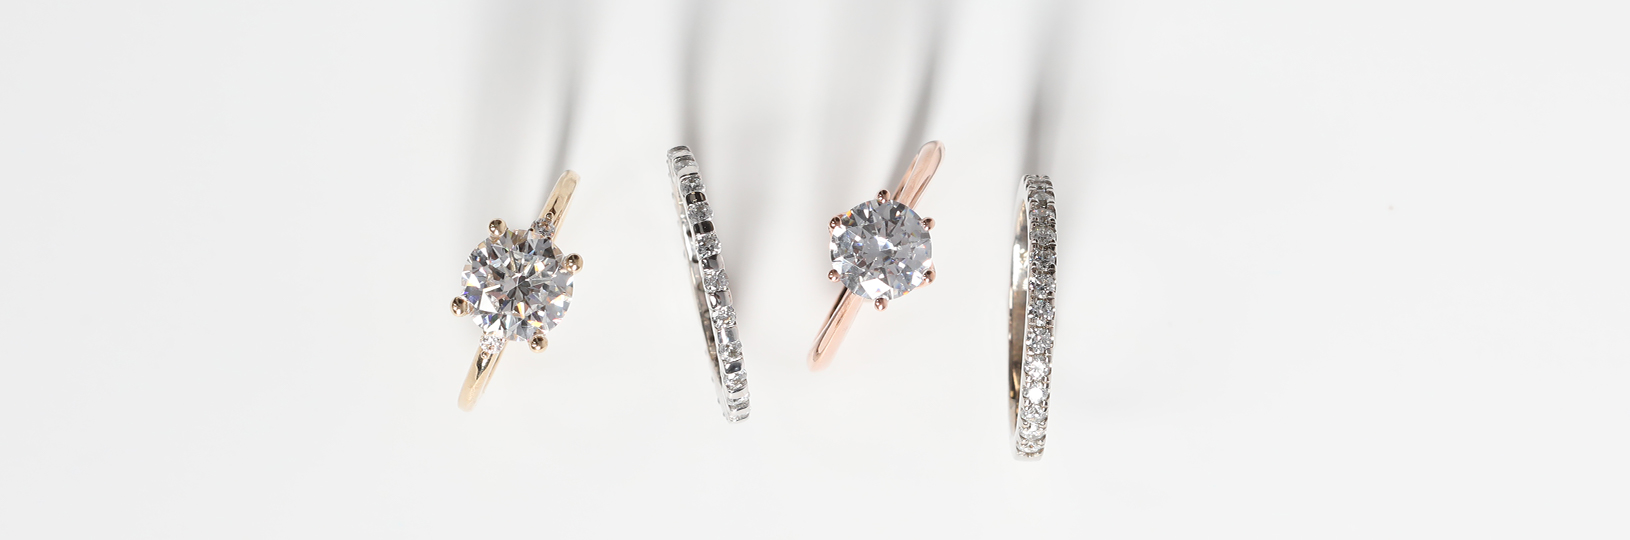 Simulated diamond engagement rings.